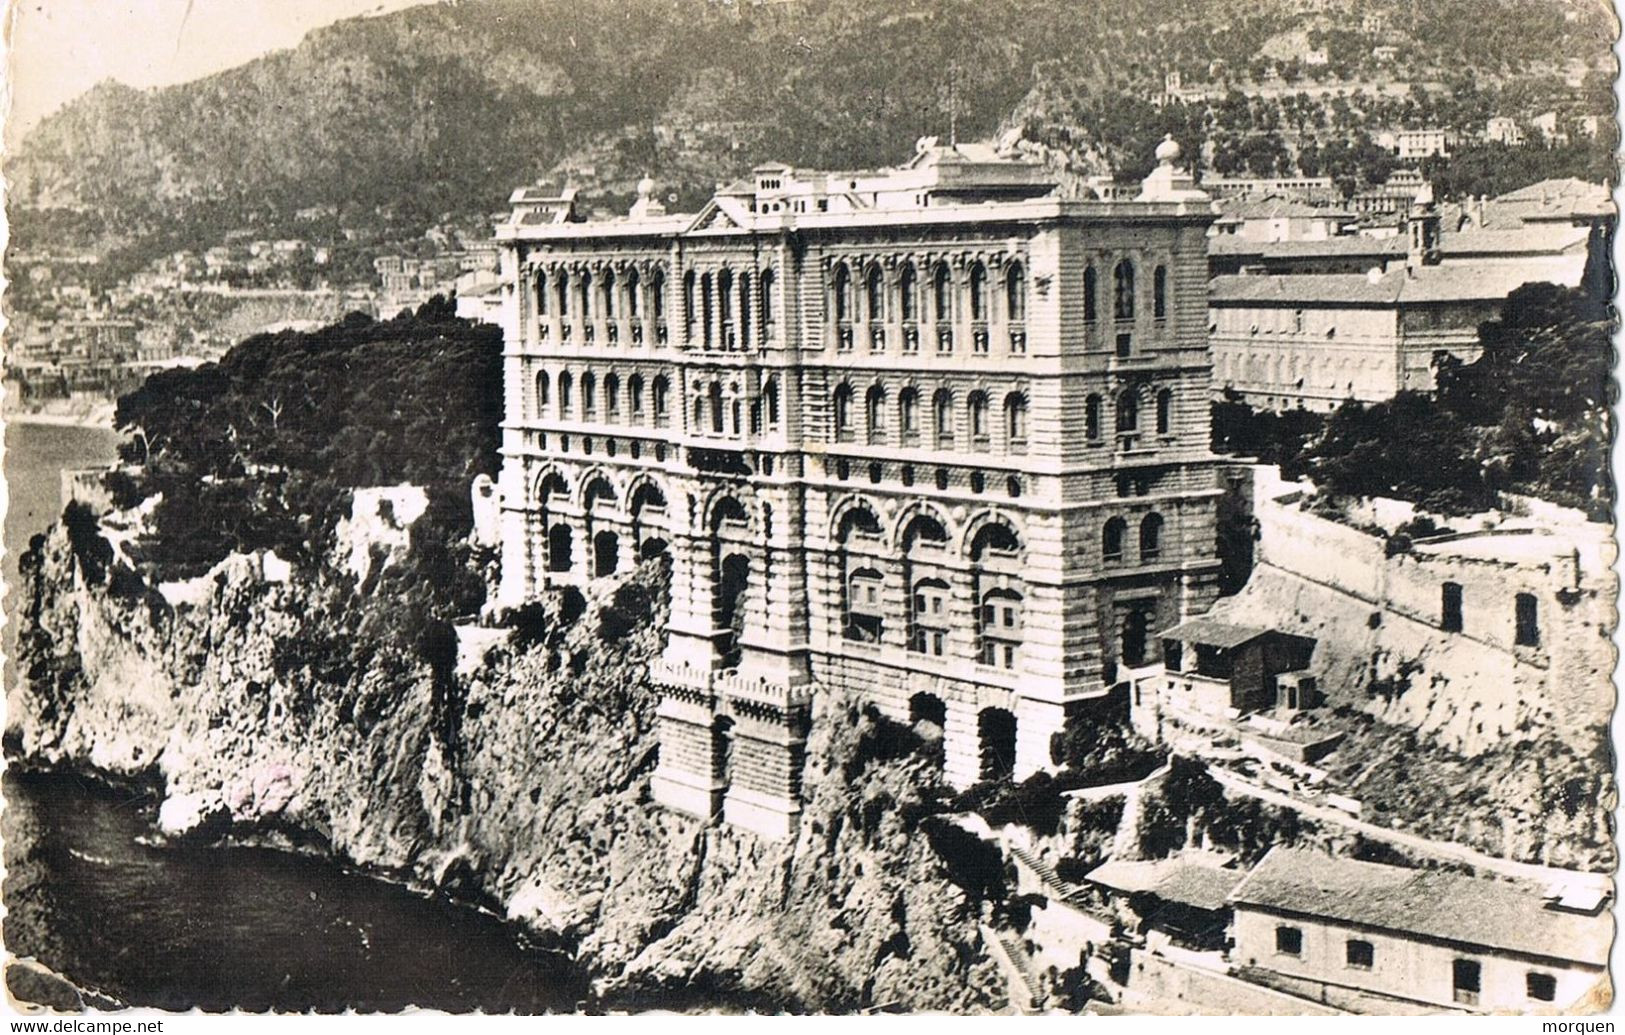 45423. Postal MONTECARLO (Monaco) 1972. Flamme Couronne Du Blason Mediterranee. Museo Oceanografico - Lettres & Documents